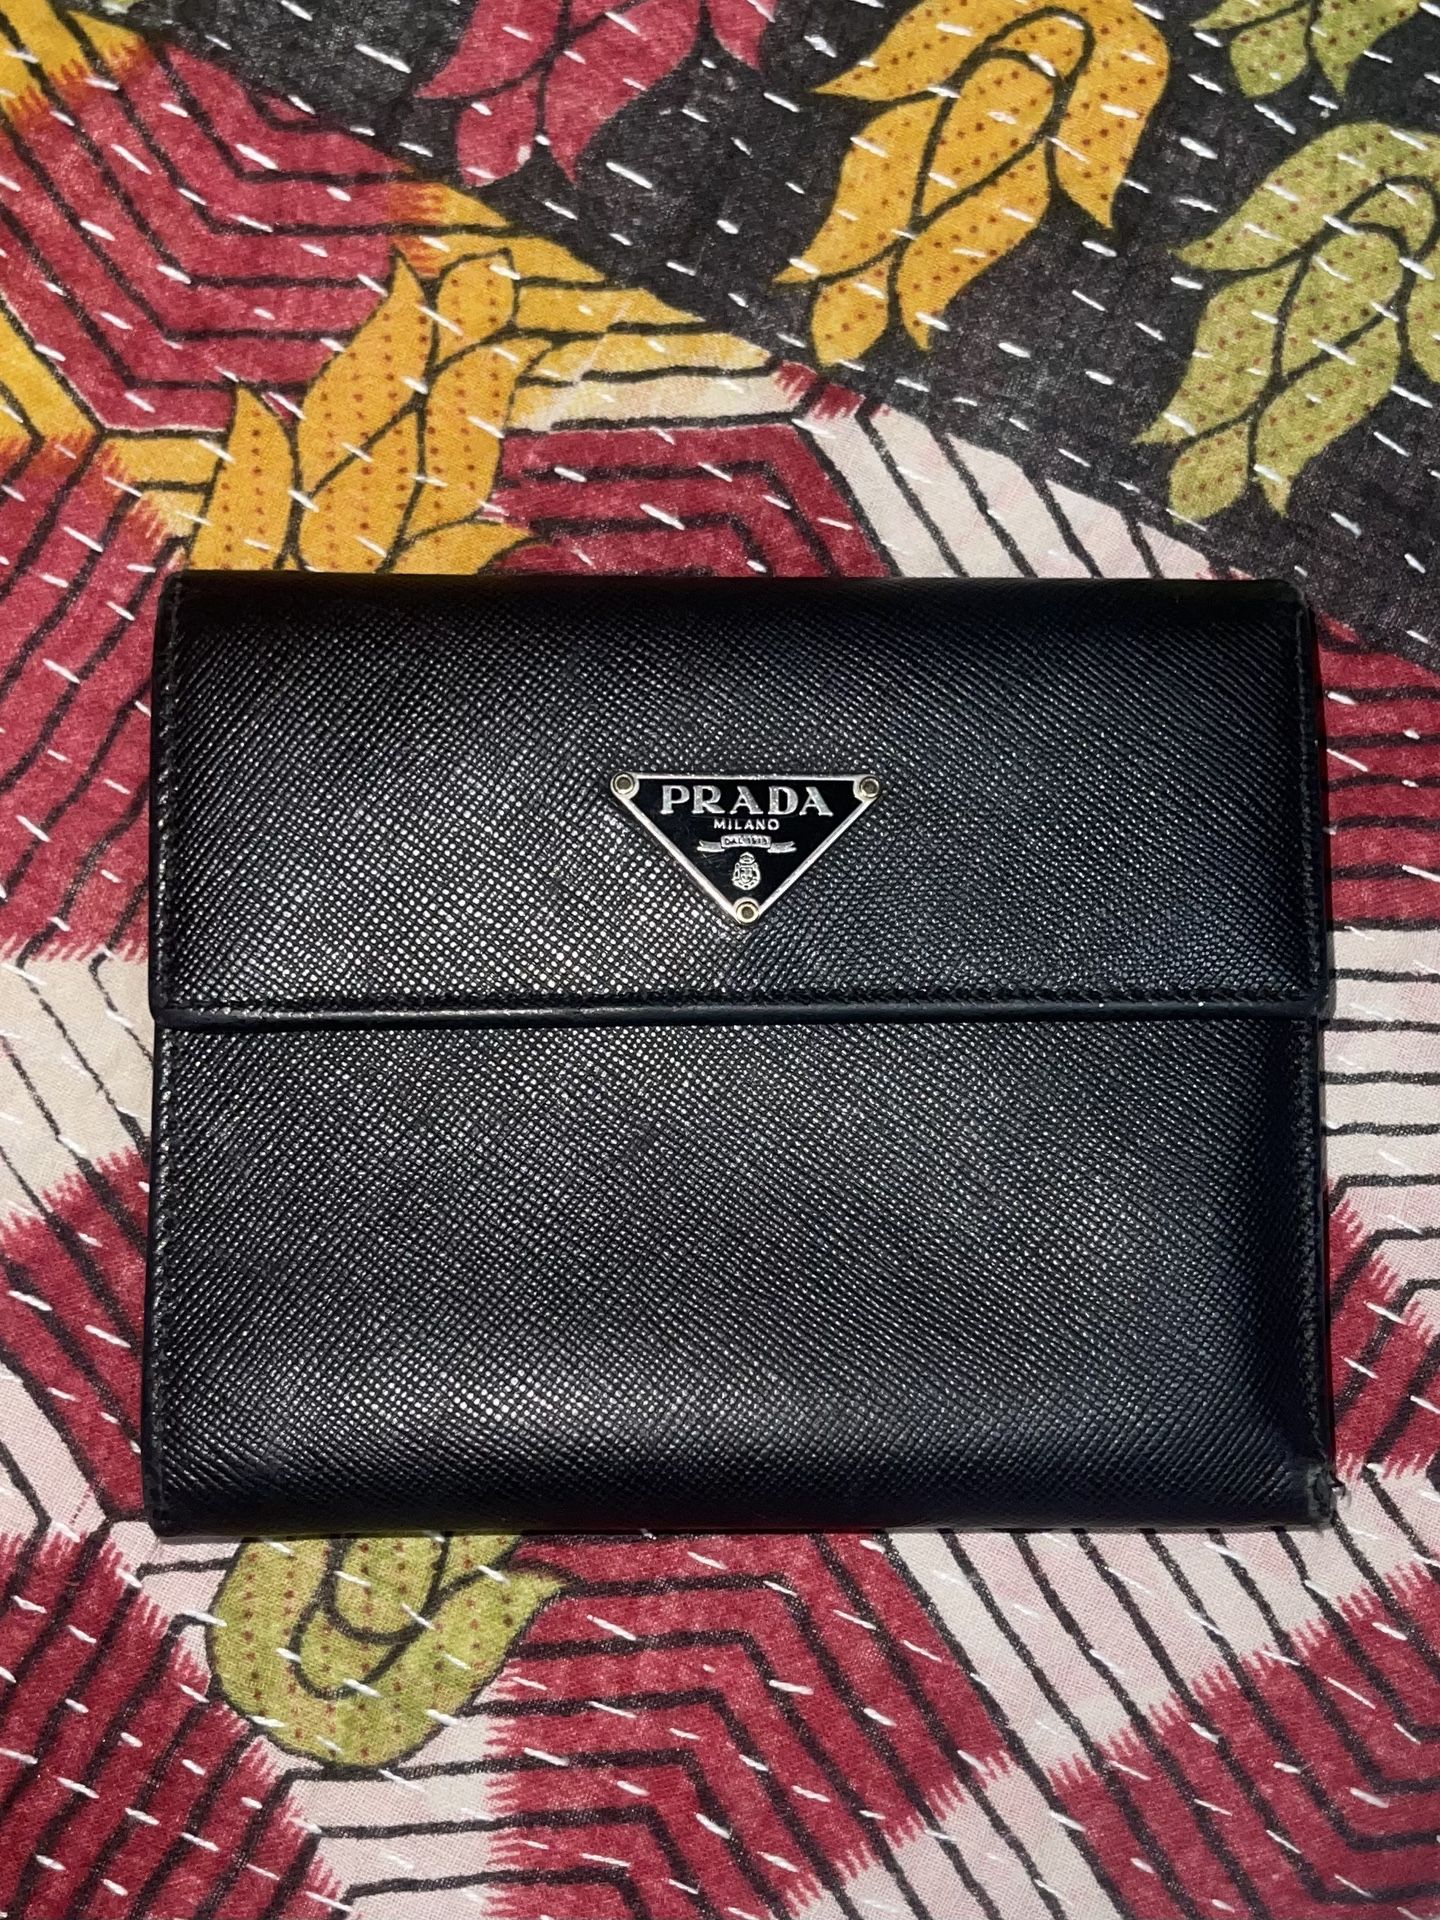 PRADA Black Leather Wallet “Saffiano” Authentic 